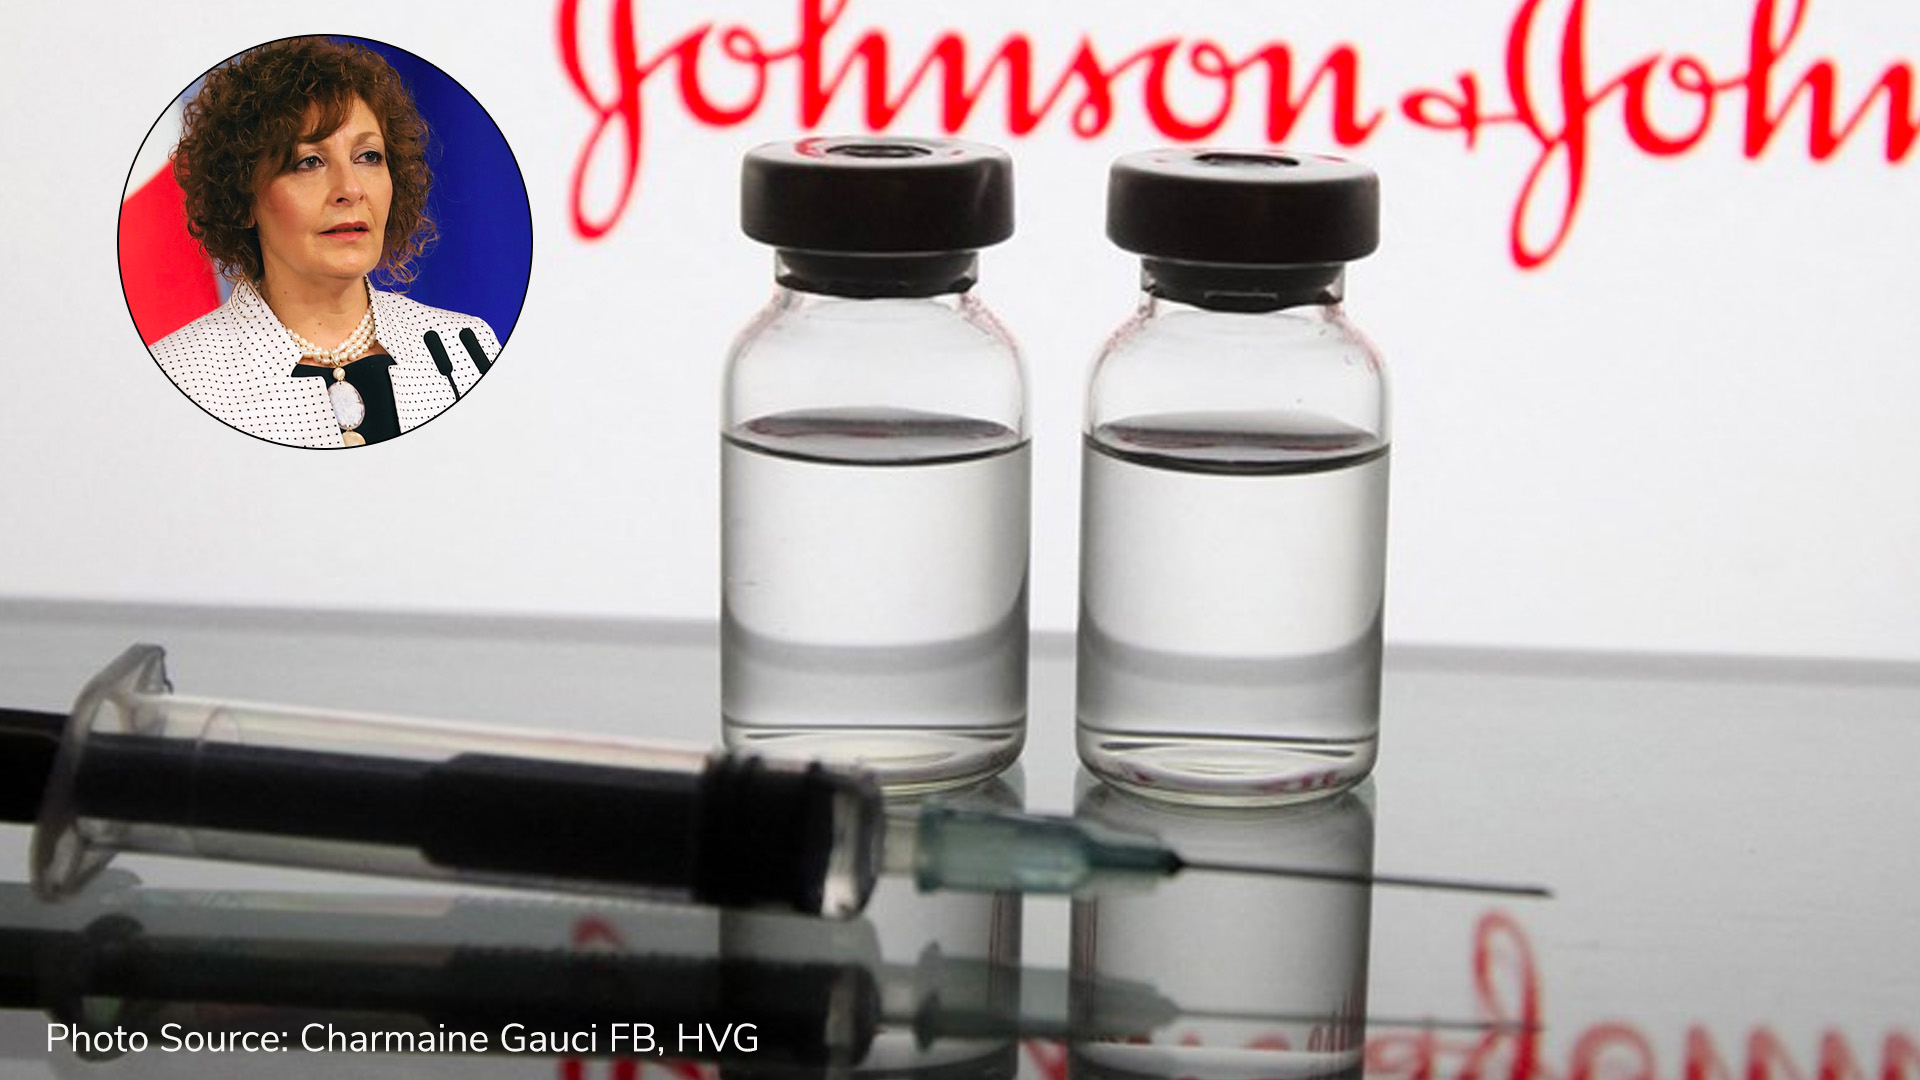 Malta still awaiting Johnson & Johnson vaccine